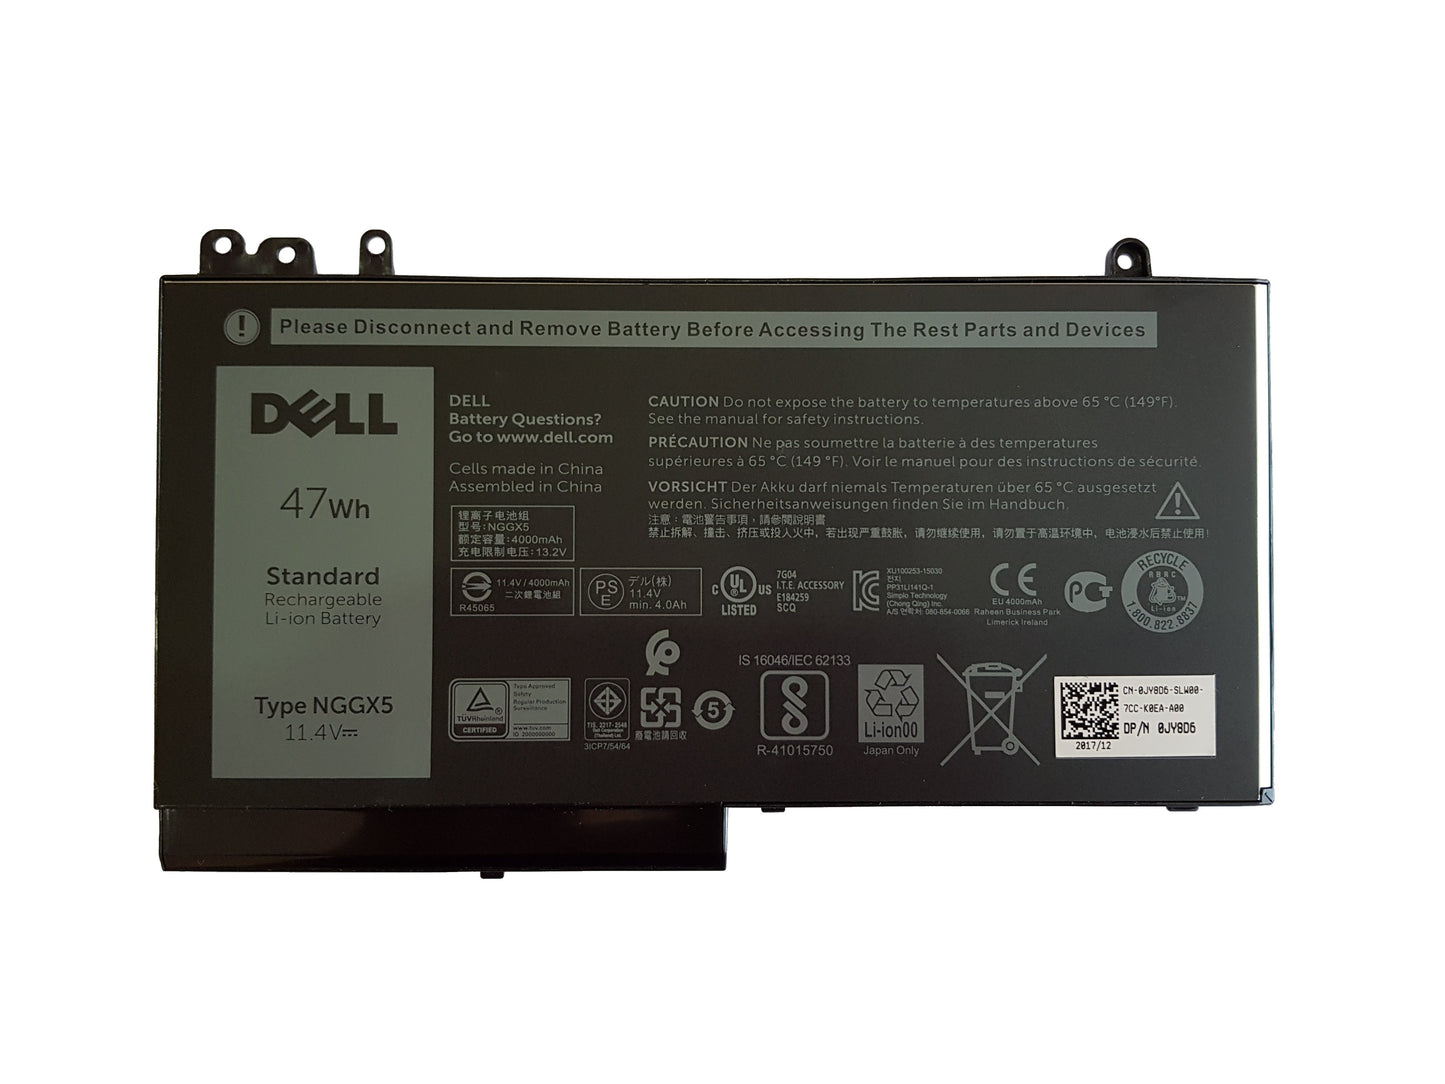 Dell Latitude E5470, E5270 3 Cell 47Wh Laptop Battery Type NGGX5 | Black Cat PC